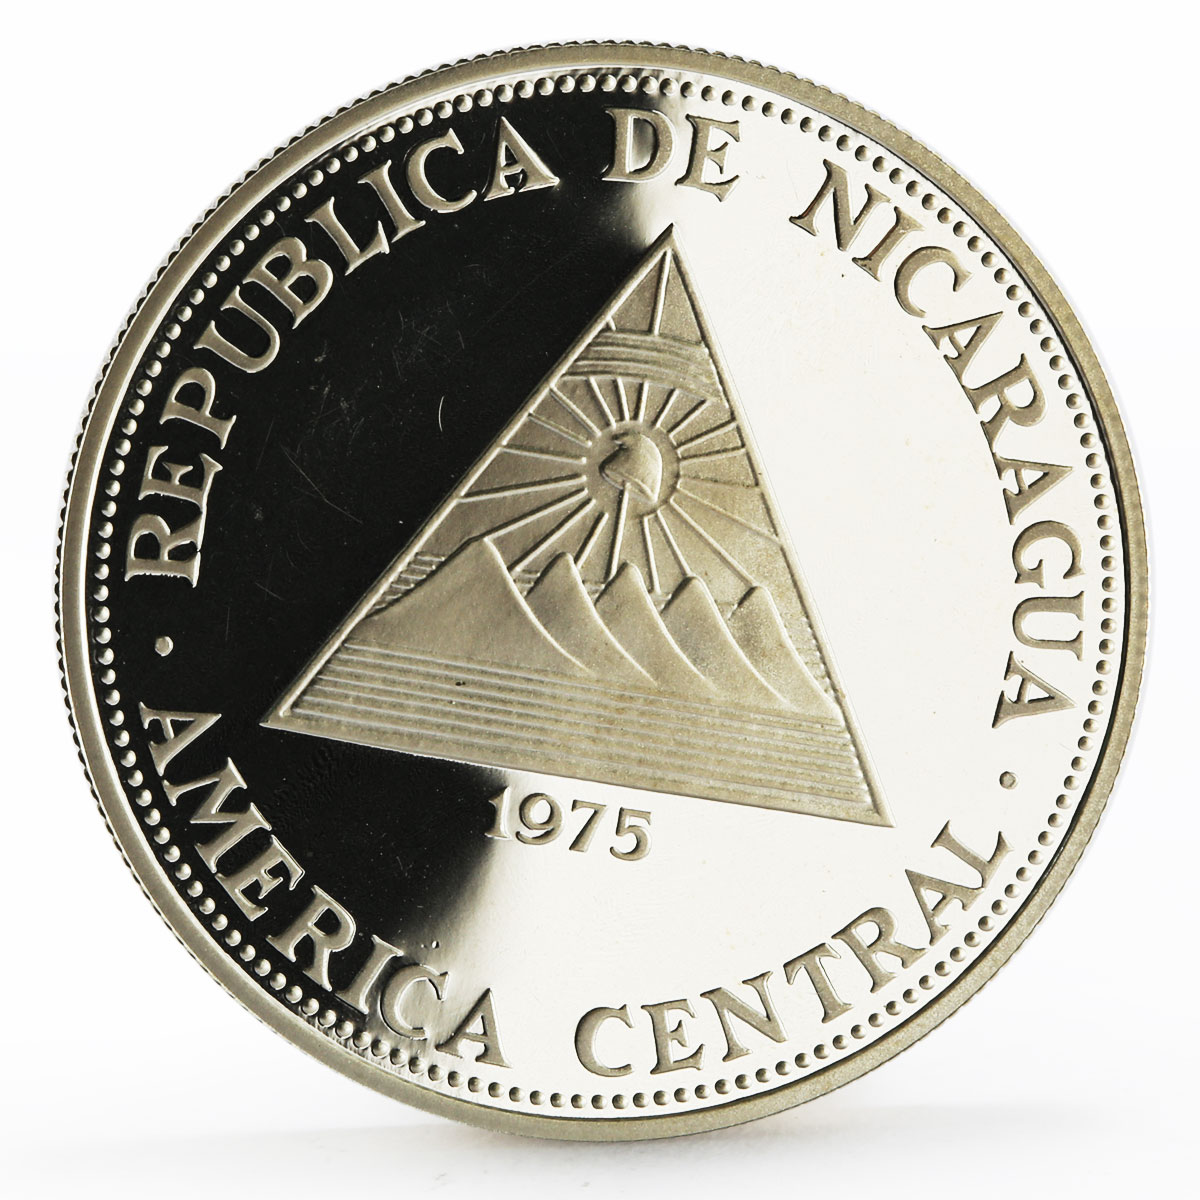 Nicaragua 100 cordobas US Bicentennial Moon Landing proof silver coin 1975